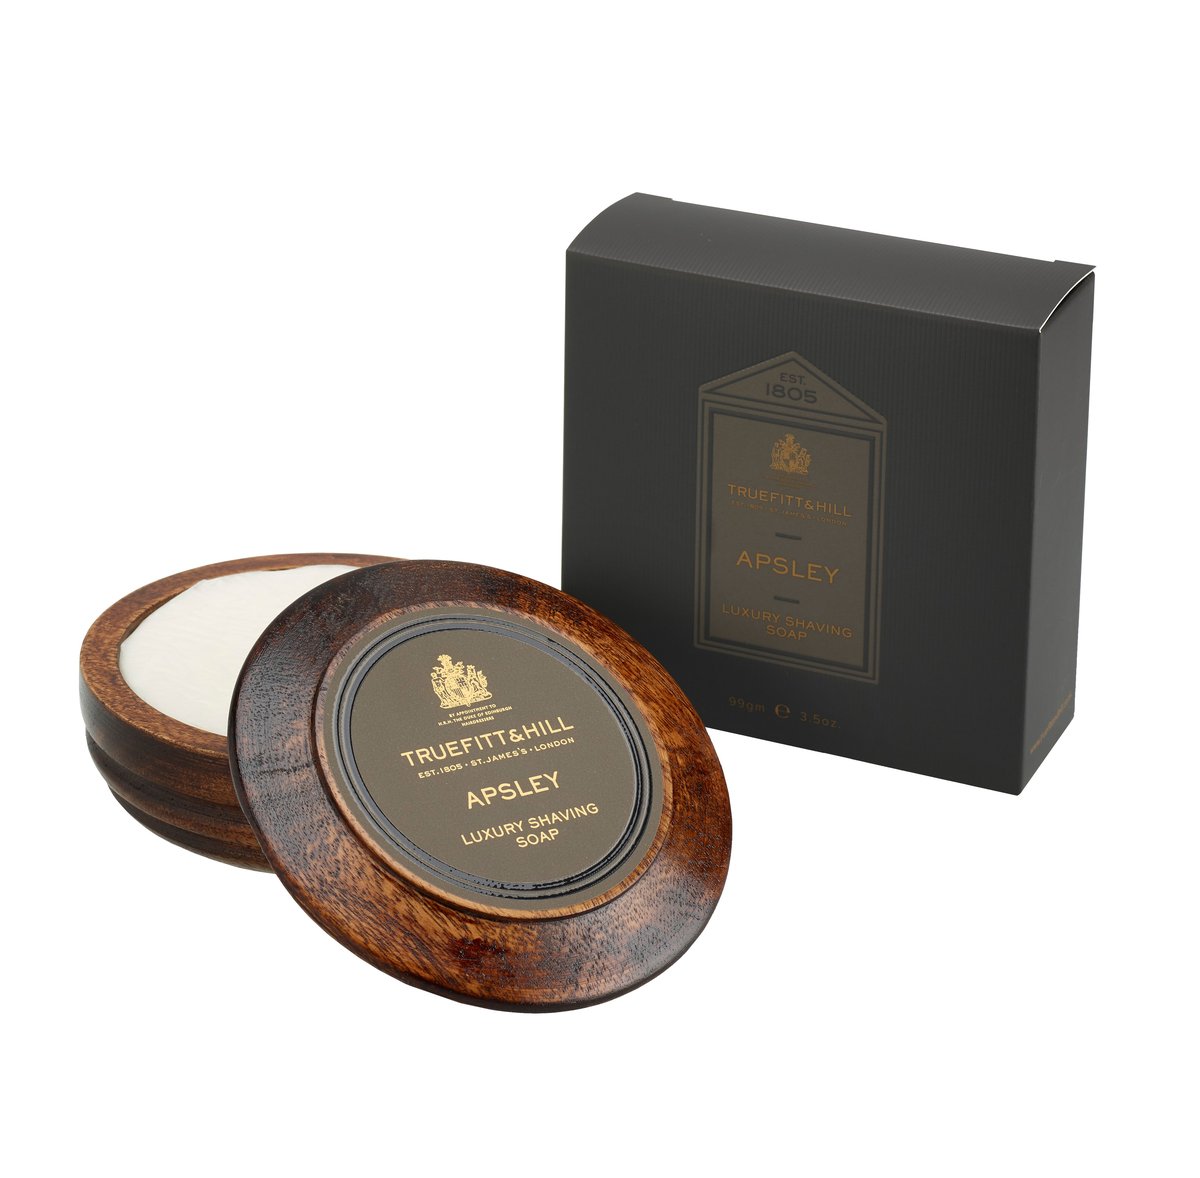 NEW! Apsley Luxury Shaving Soap In Wooden Bowl